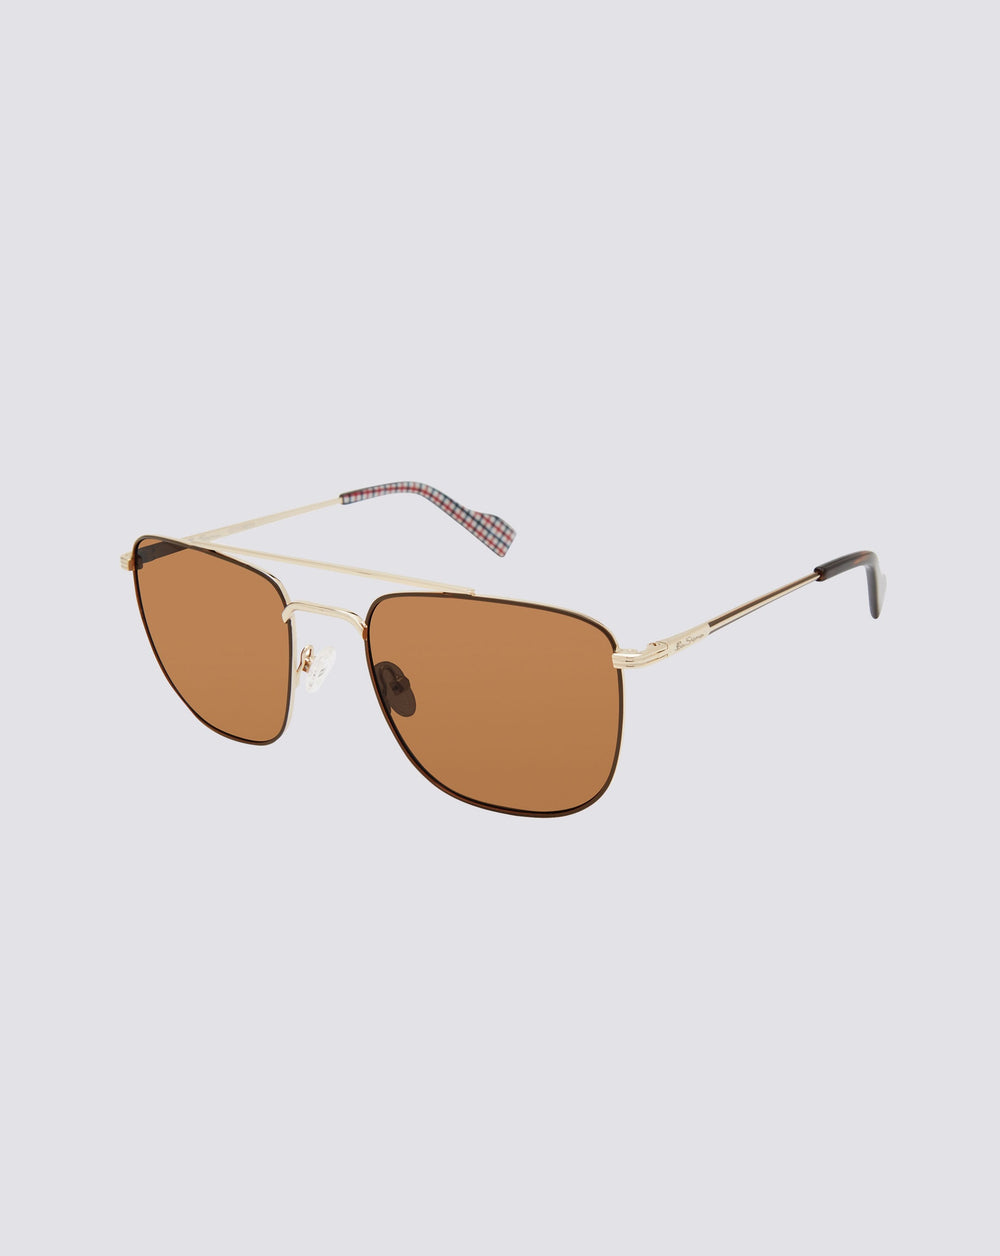 Square Aviator Full Reader Lens Sunglasses Style R72 - Sunglass Rage